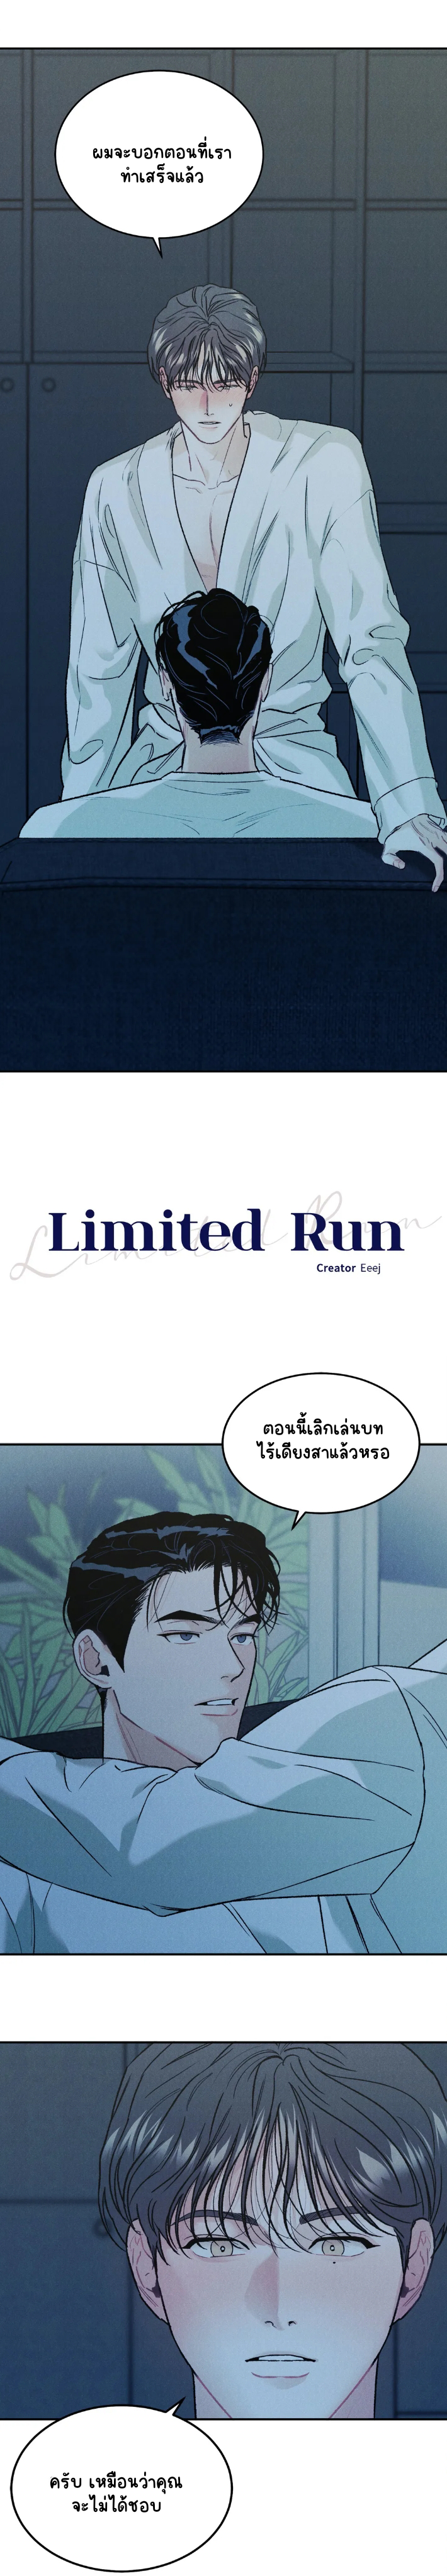 Limited Run 16-3